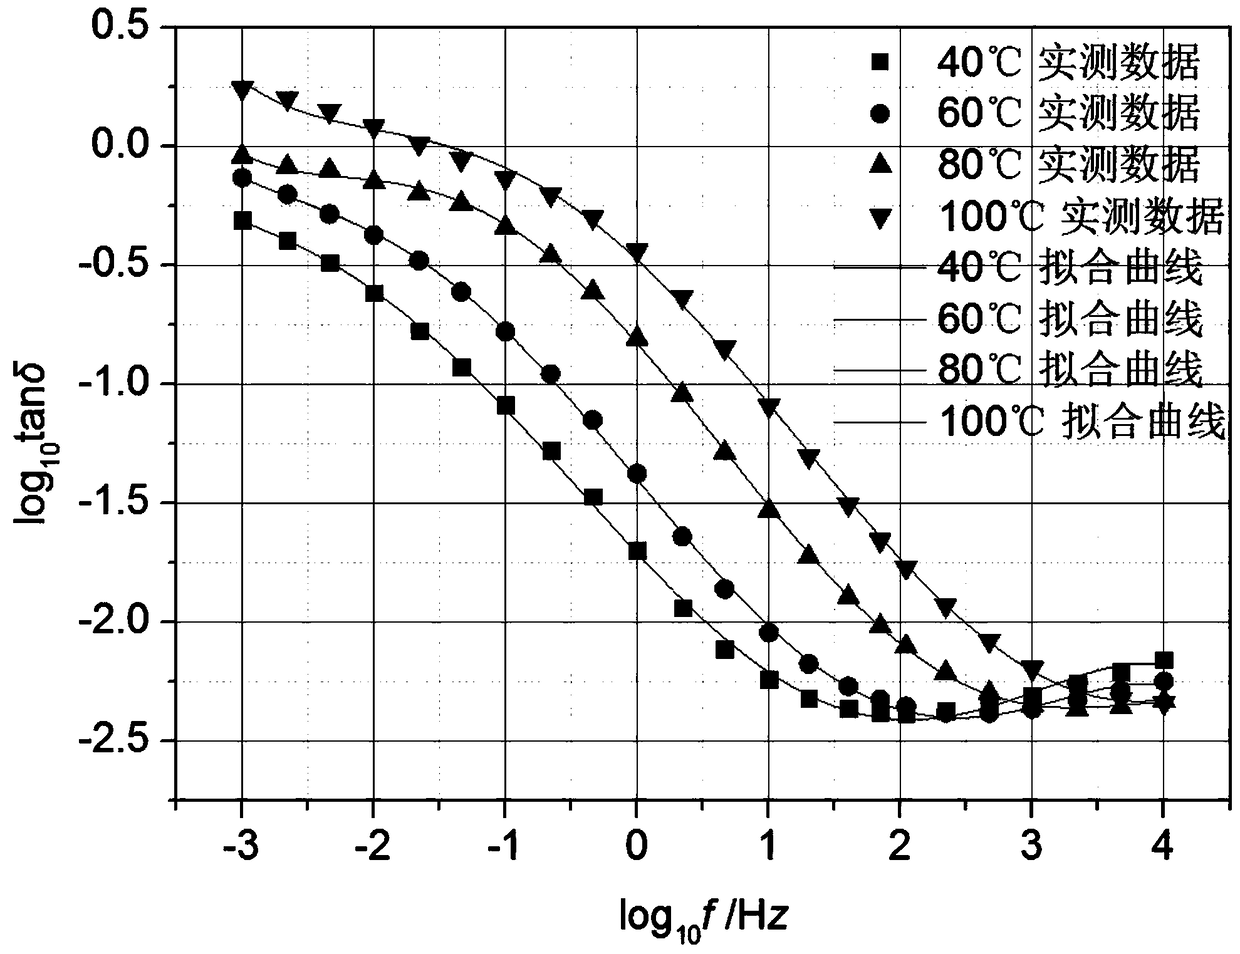 Method for evaluating service life of oil-paper insulation inside high-voltage current transformer